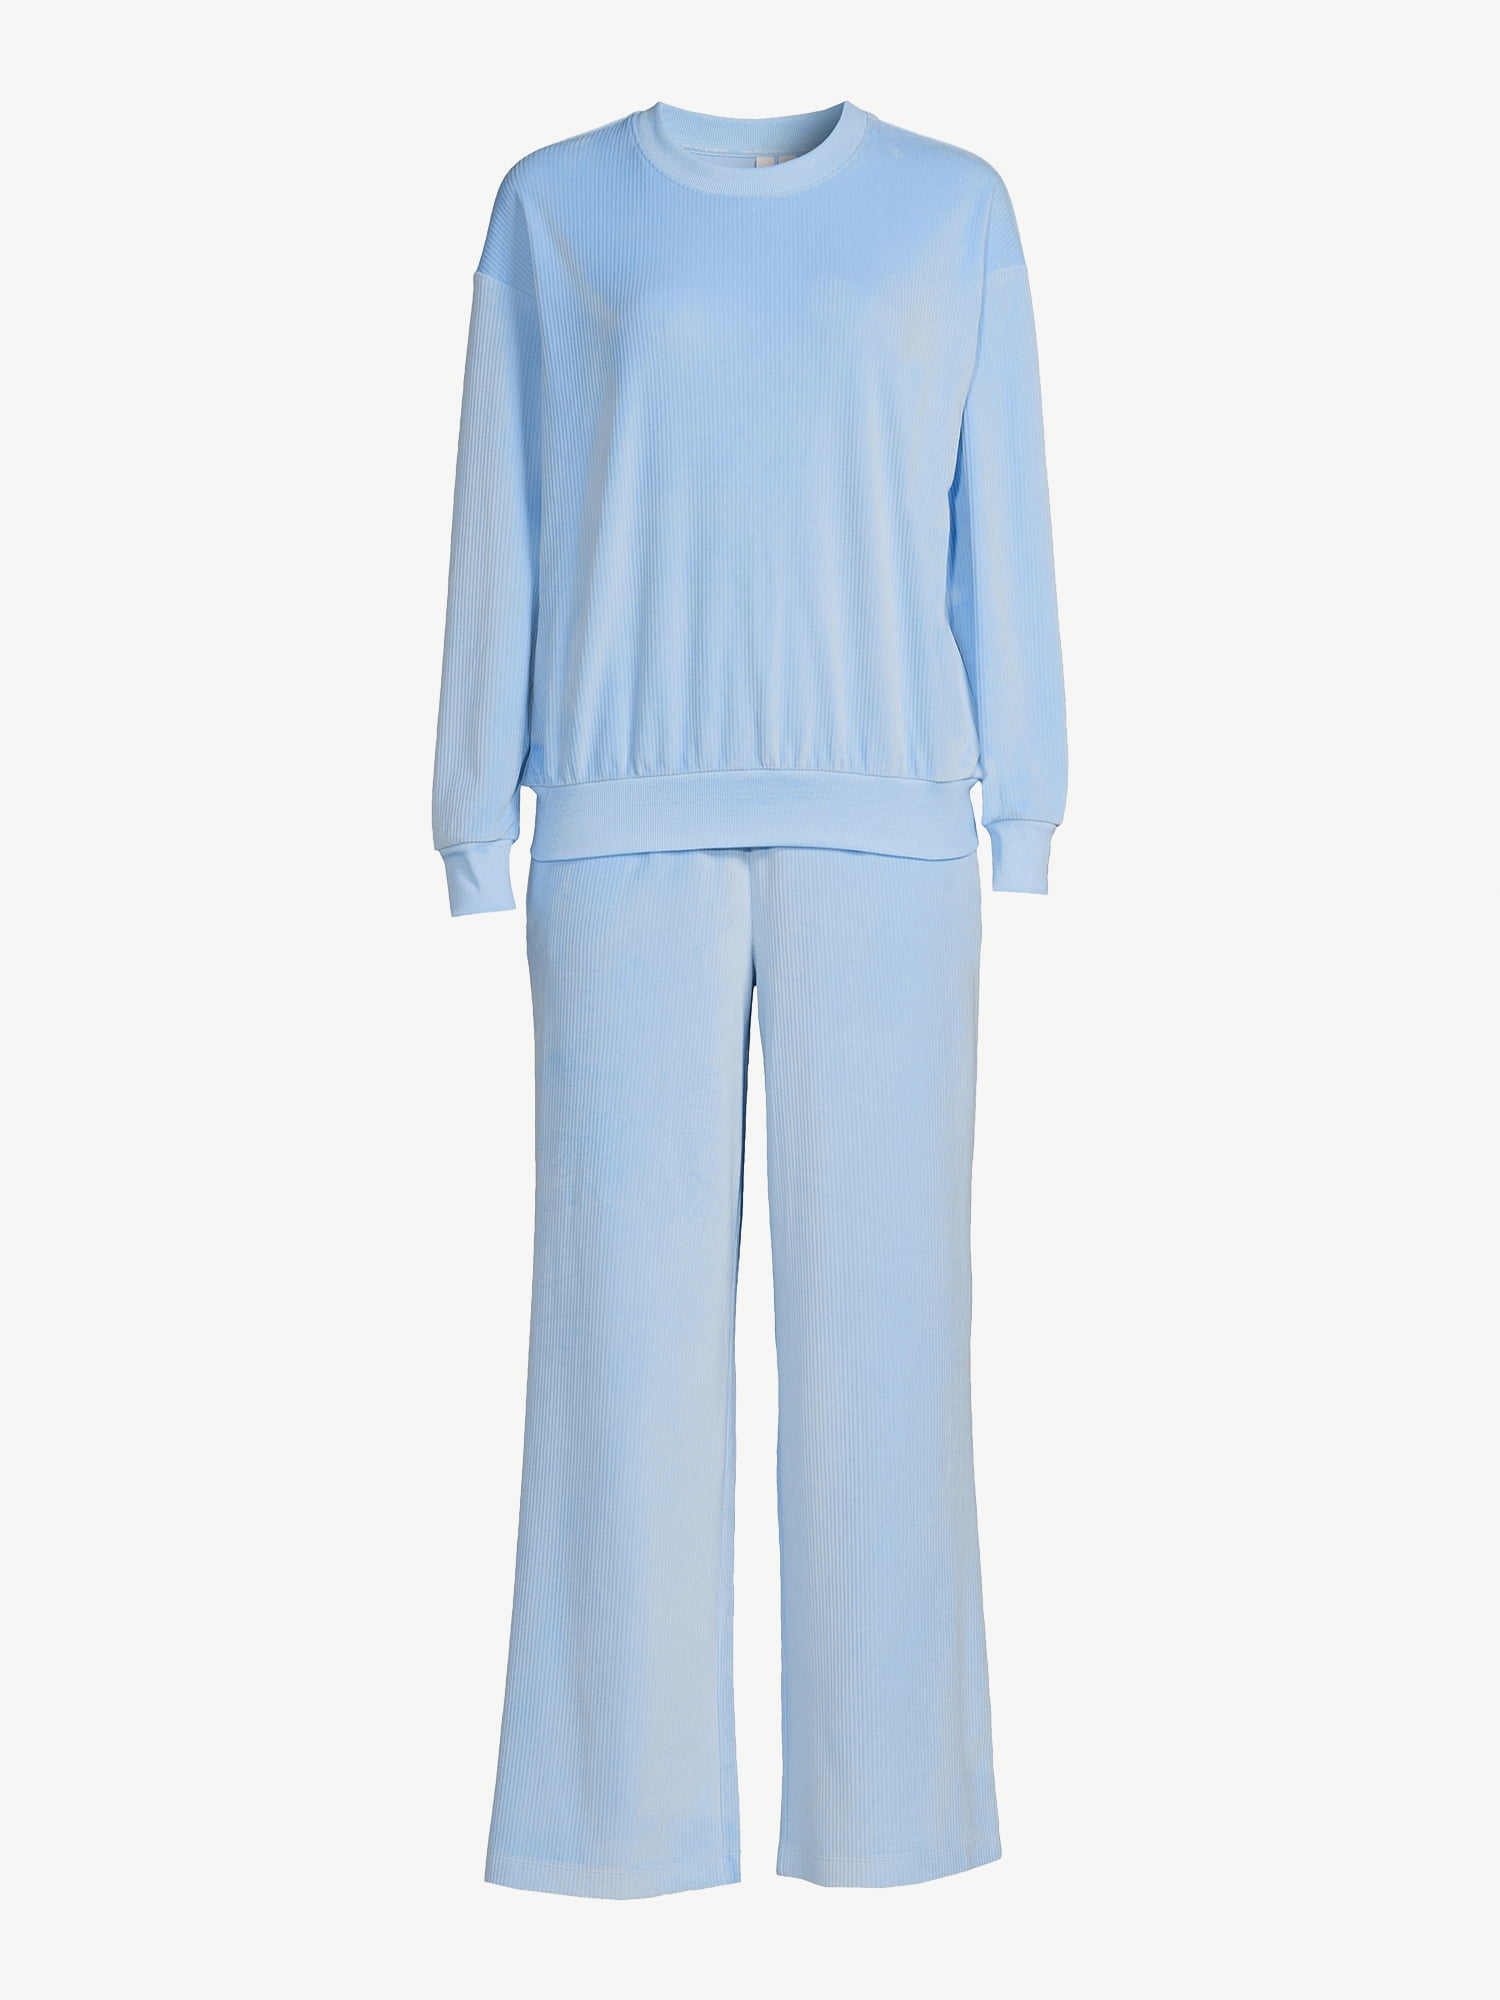 Joyspun Women's Ribbed Velour Top and Pants Pajama Set with Oversized  Scrunchie, 3-Piece, Sizes S to 3X 